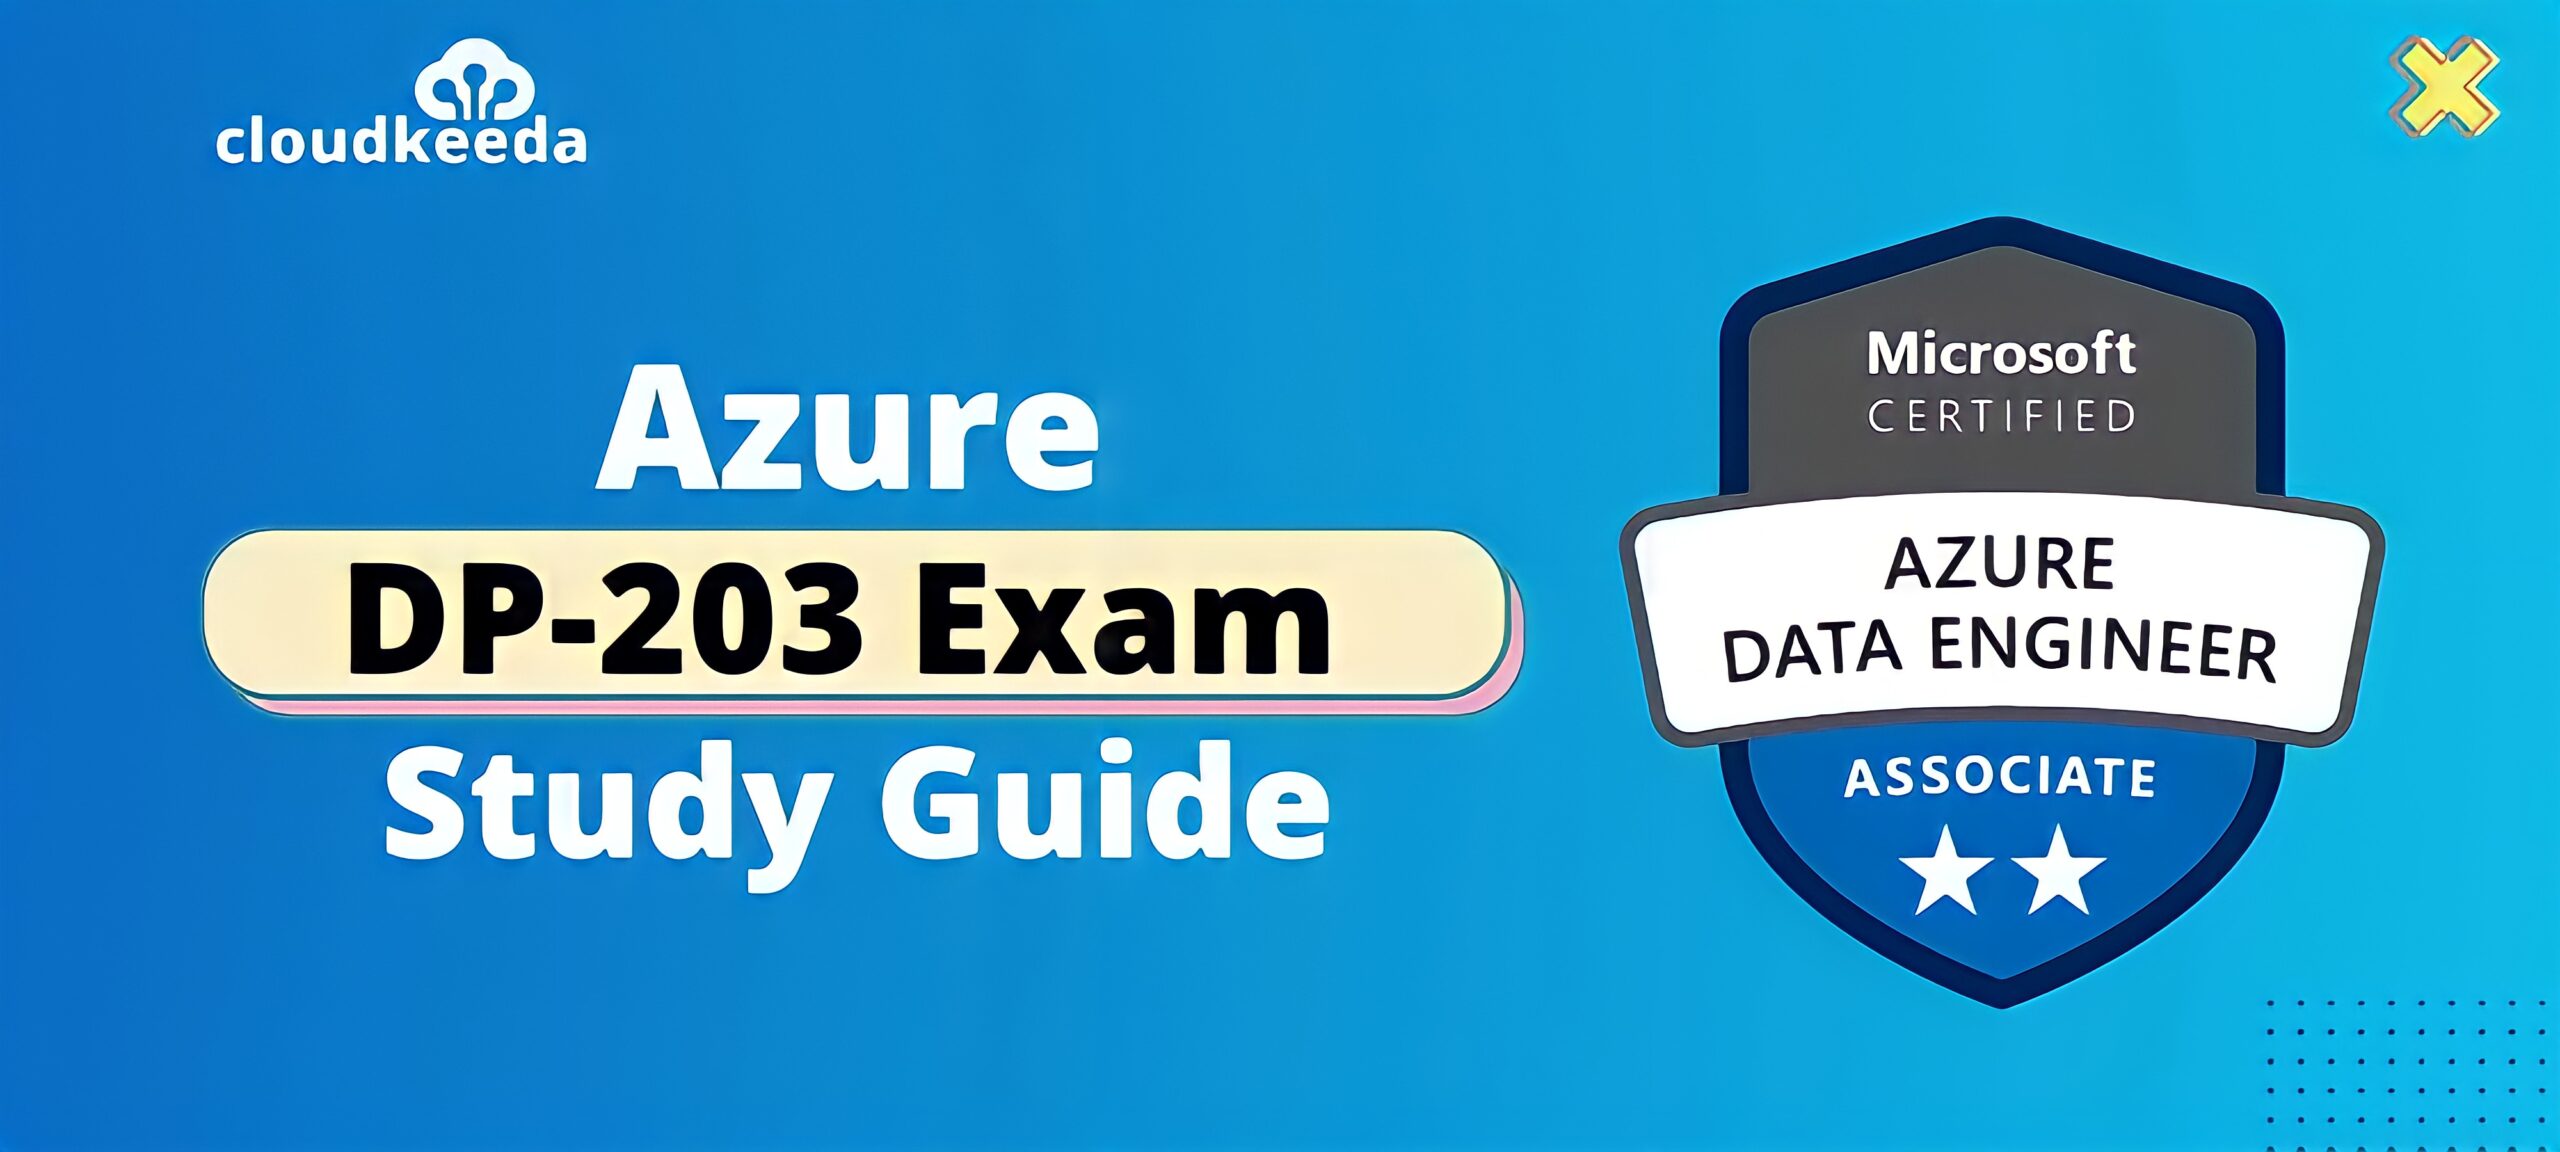 DP-203 Study Guide